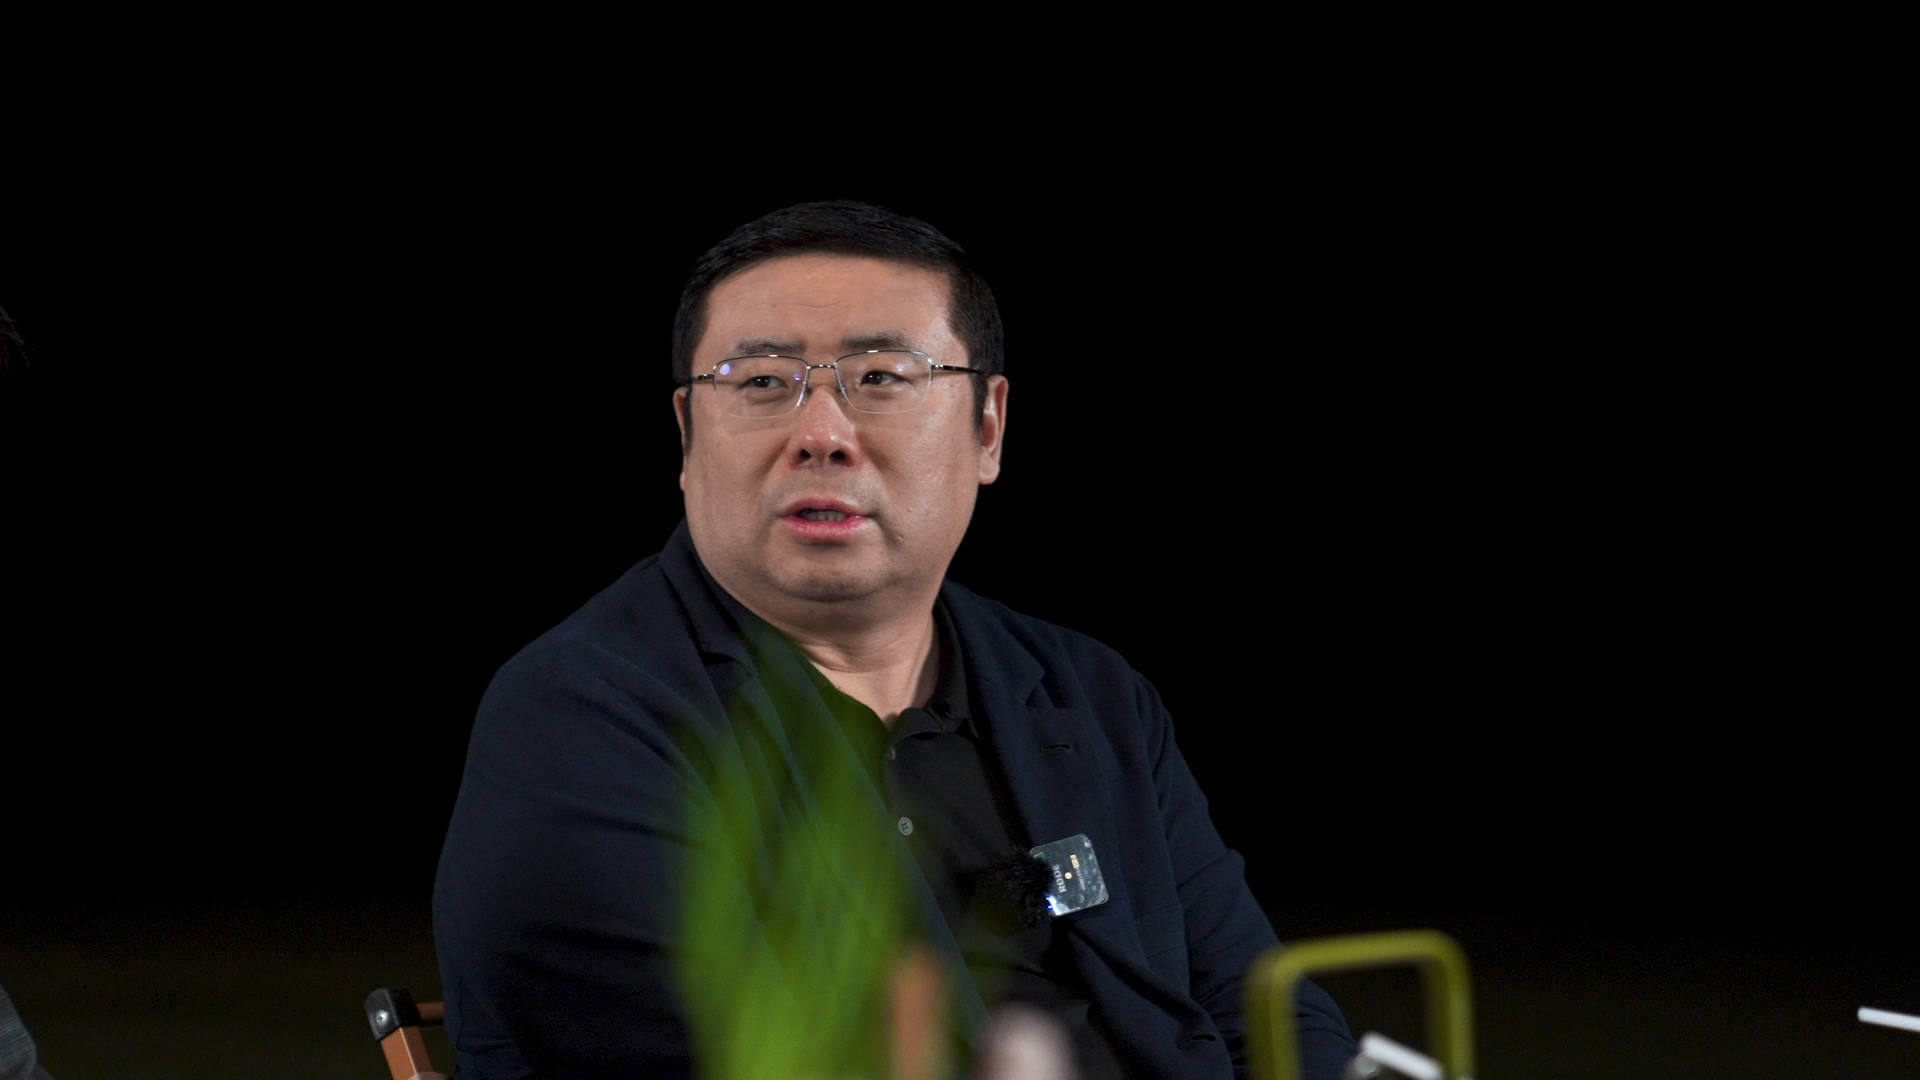 Sohu Column about Boao｜Wang Huiyao vs Li Yong: Globalization will not End, Chinese Enterprises Must “Trade Before Investing” When Going Global